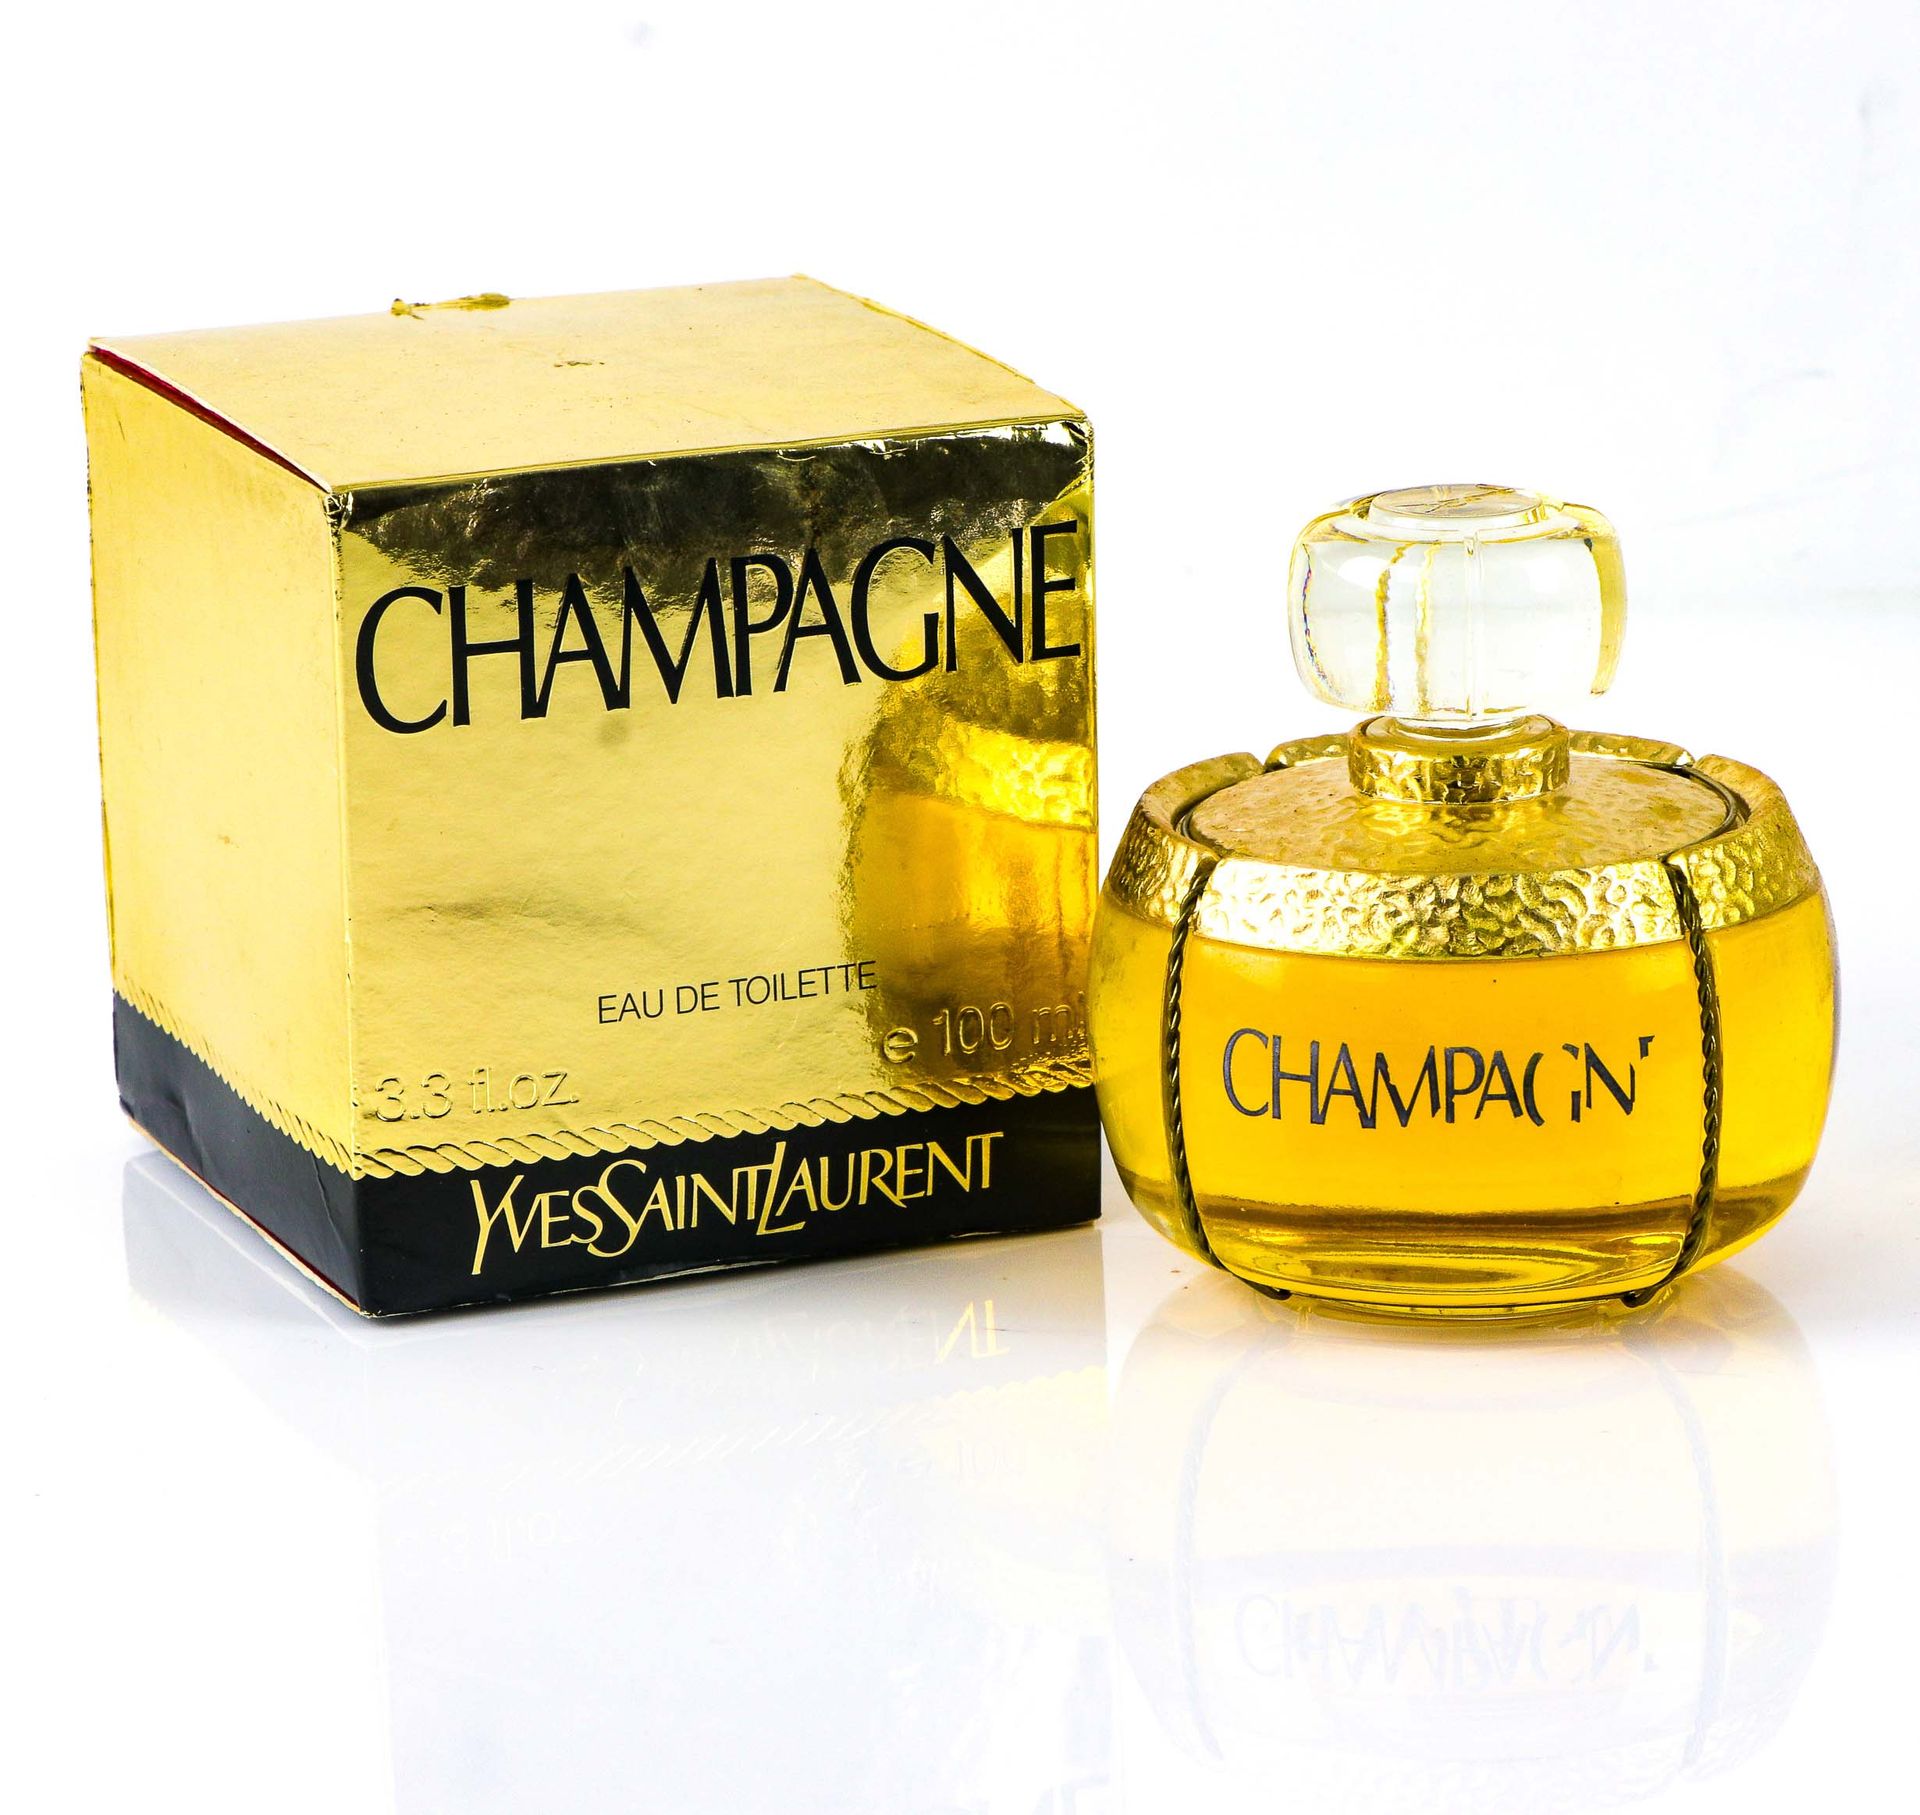 Null YVES SAINT-LAURENT - "Champagne" - Eau de toilette bottle - 100 ml - In its&hellip;